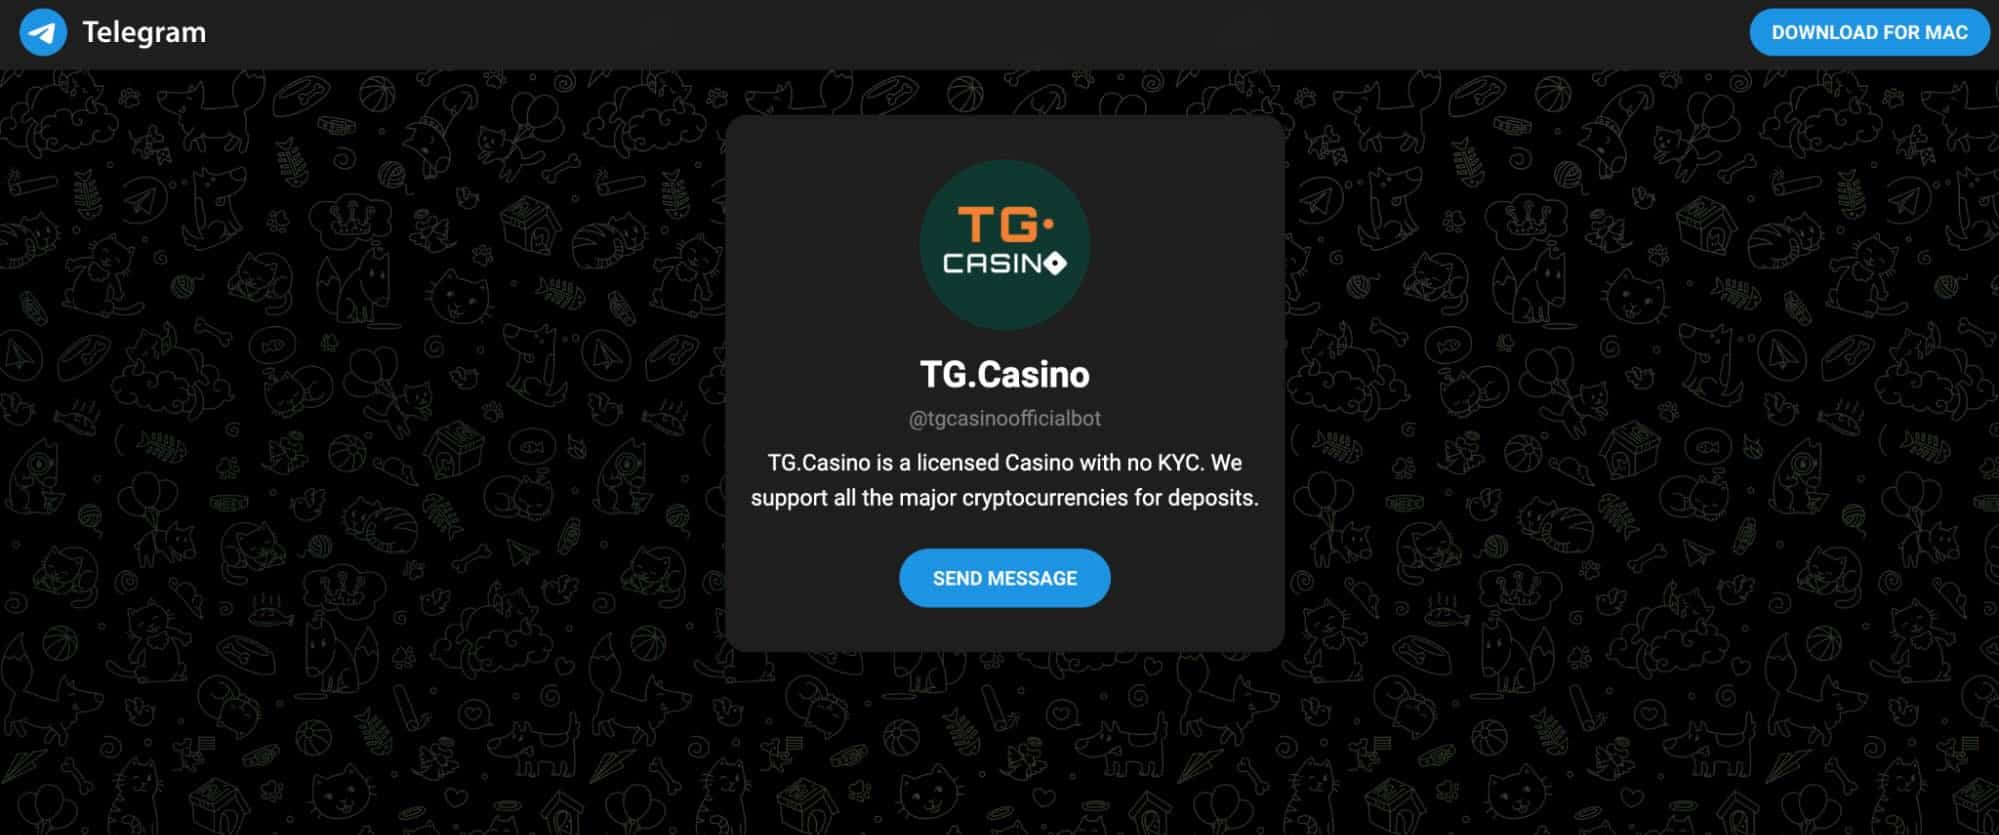 TG Casino Telegram login page - the best Telegram betting channels